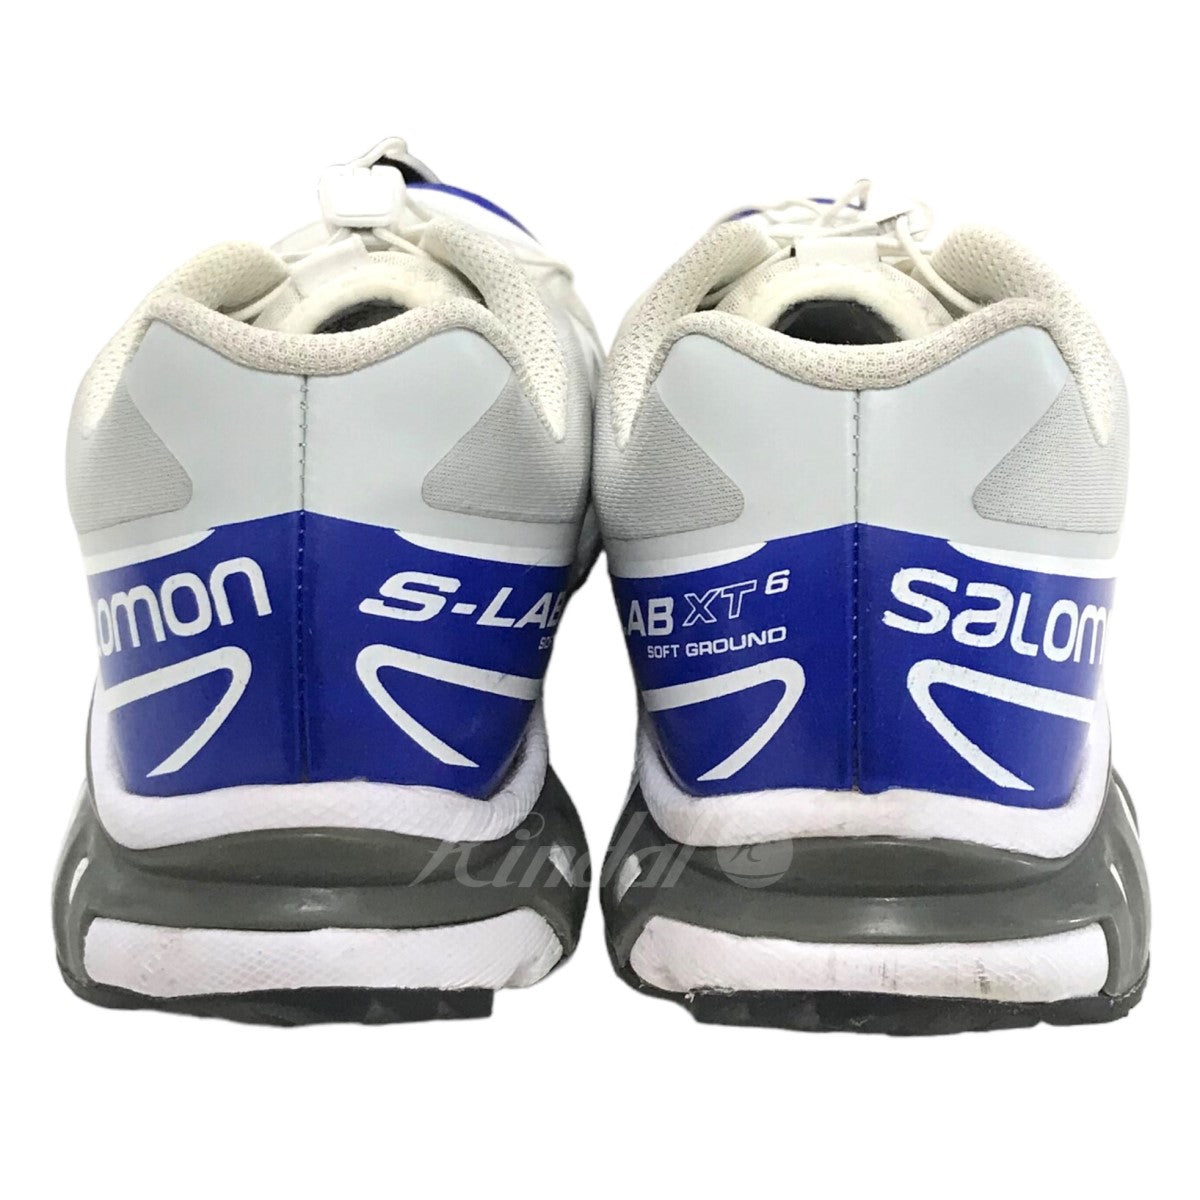 SALOMON(サロモン) 「XT-6 ADV」スニーカー 412531 ホワイト サイズ 14 